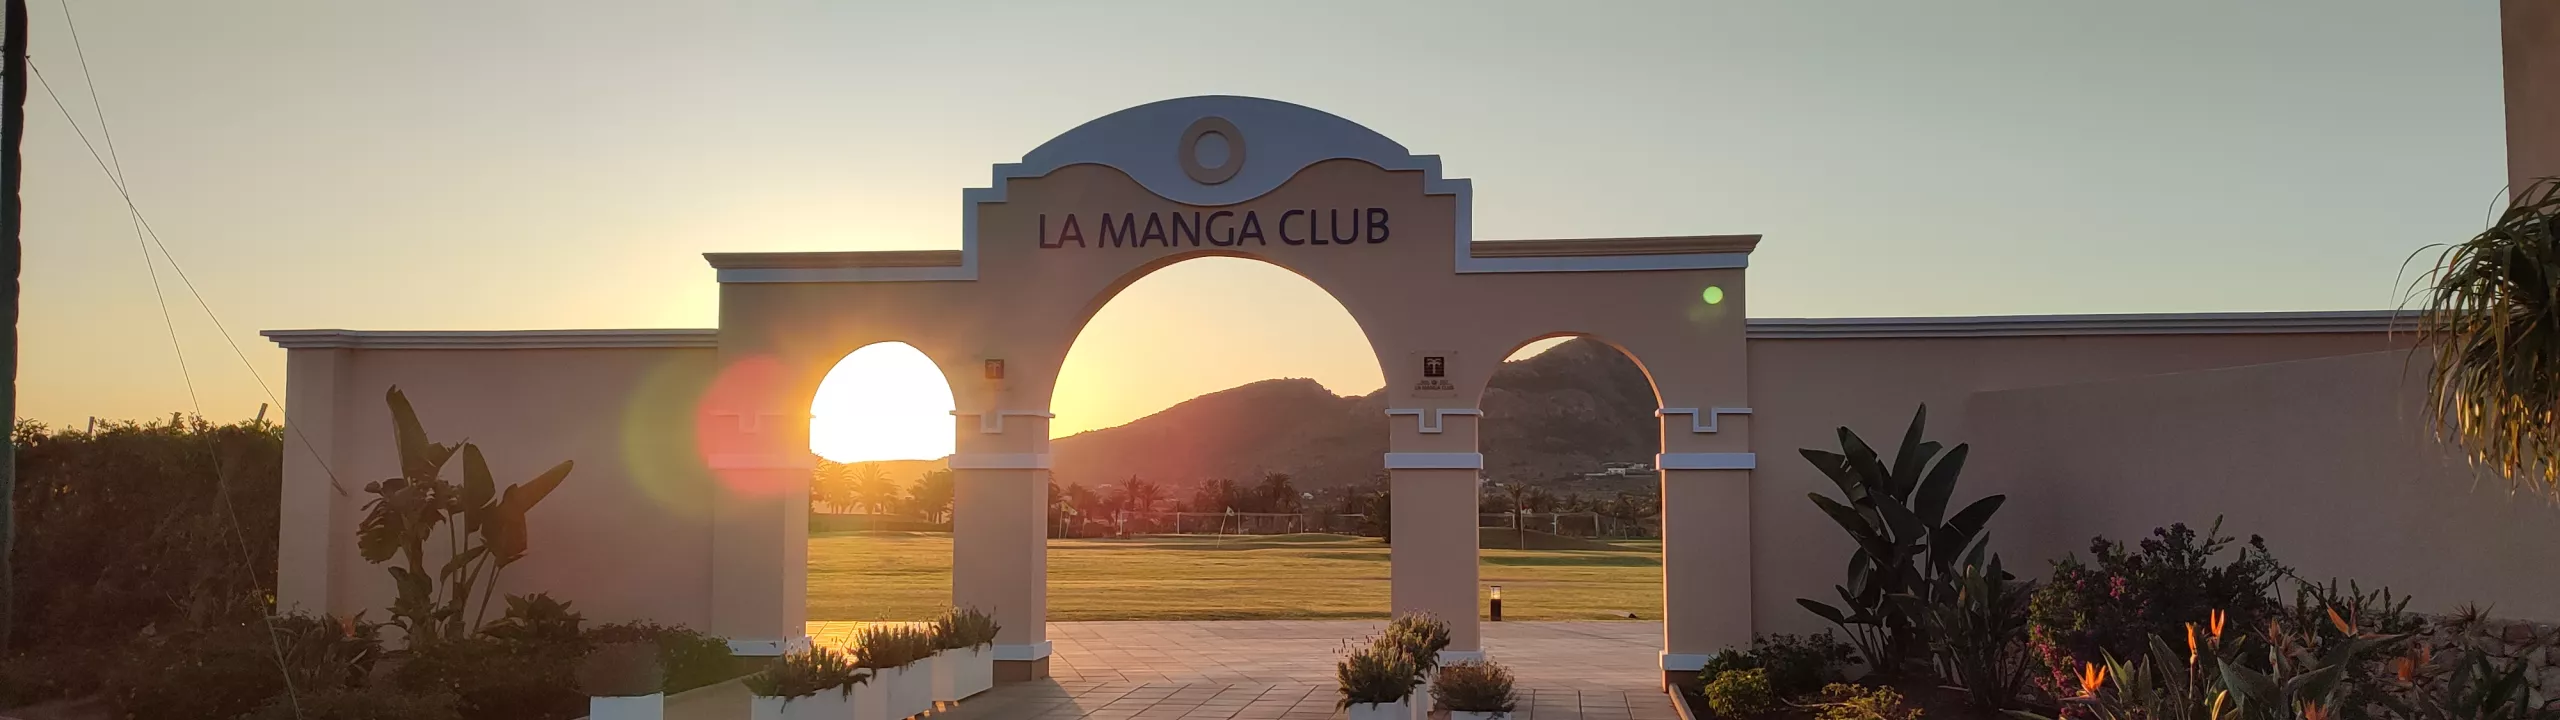 Improvements at the Real Golf La Manga Club